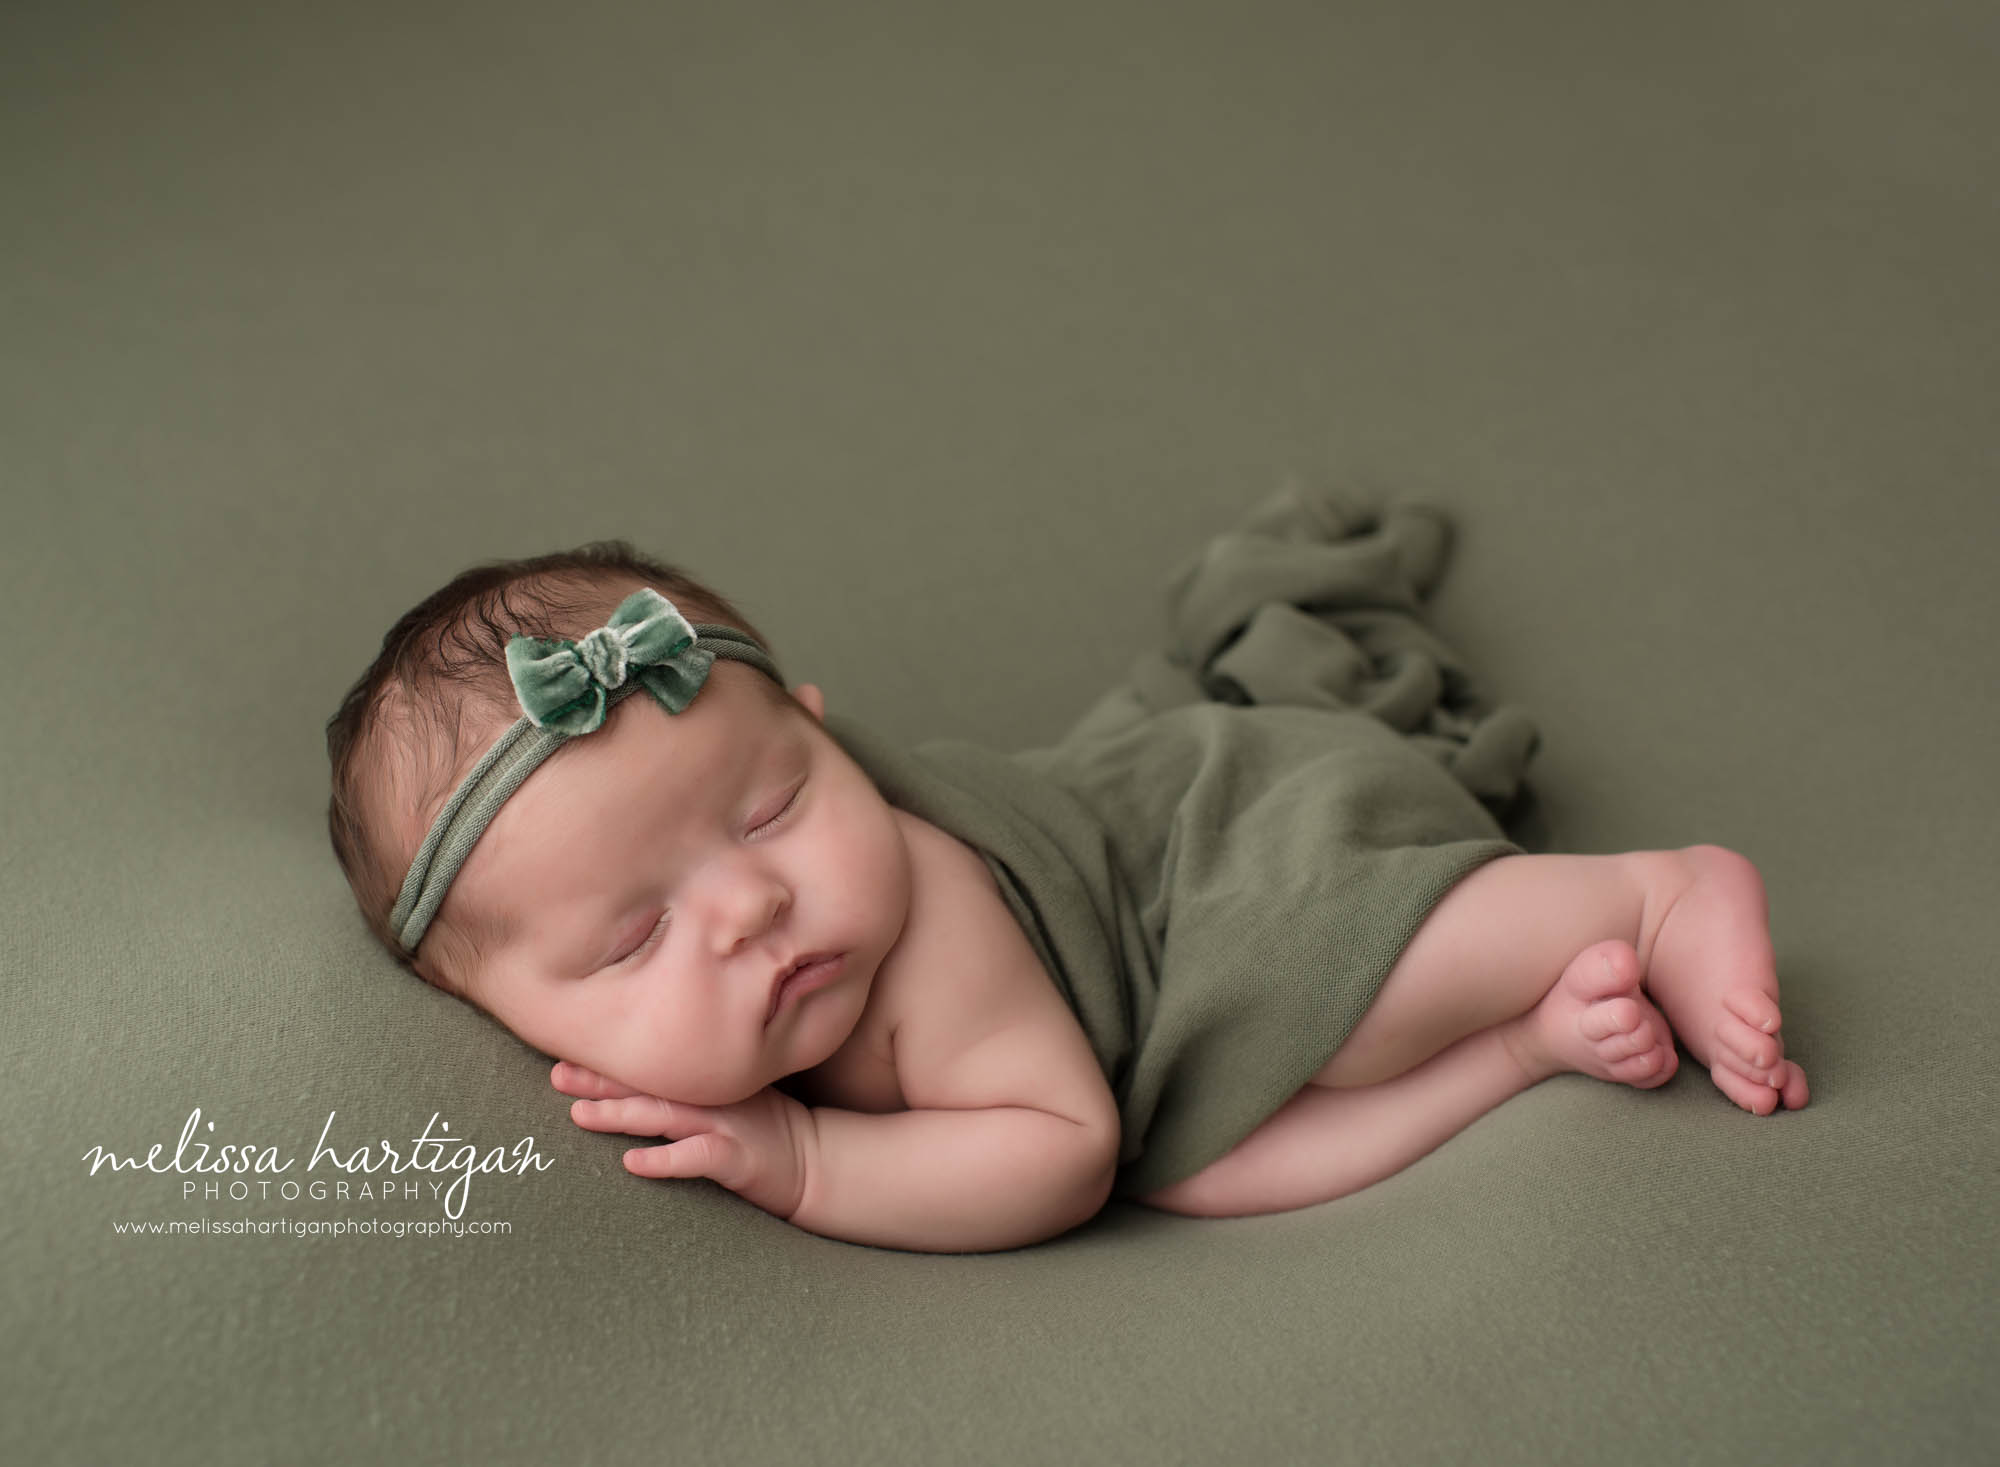 newborn baby girl posed sleeping on side tummy with hand under cheek wearing green bow headband Massachusetts maternity newbornphotography